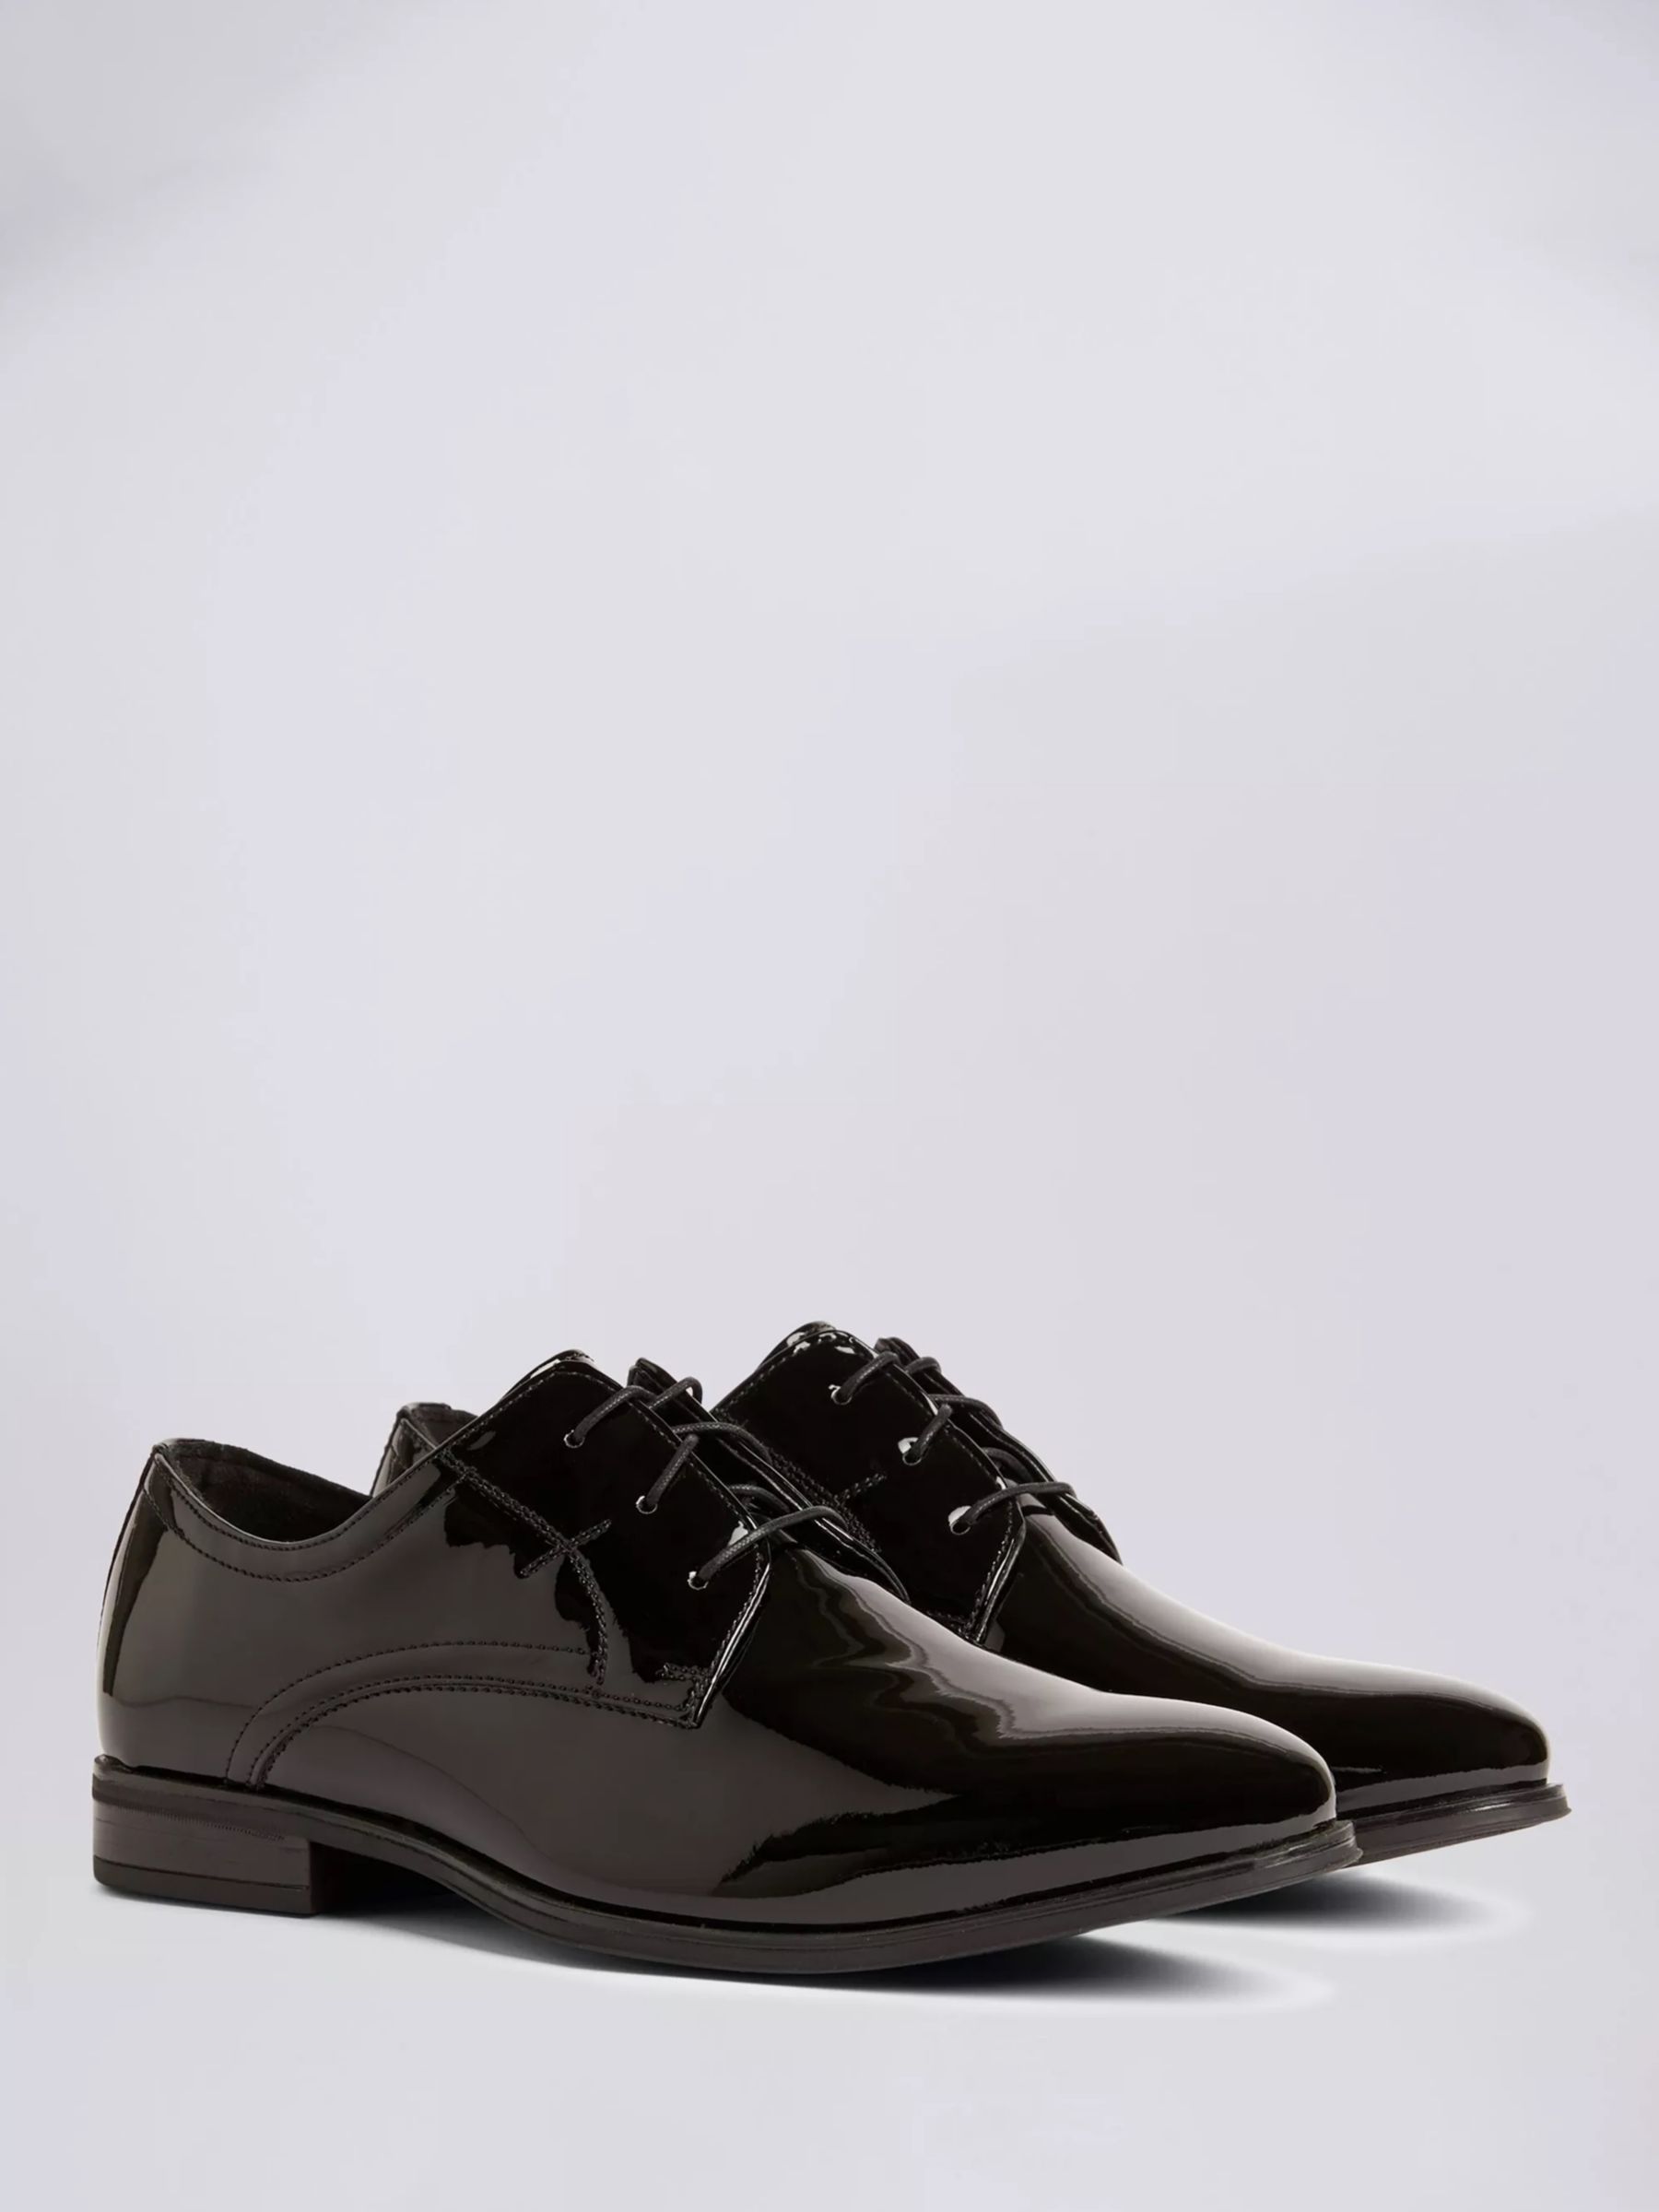 Moss Mayfair Patent Dress Shoes, Black, 6